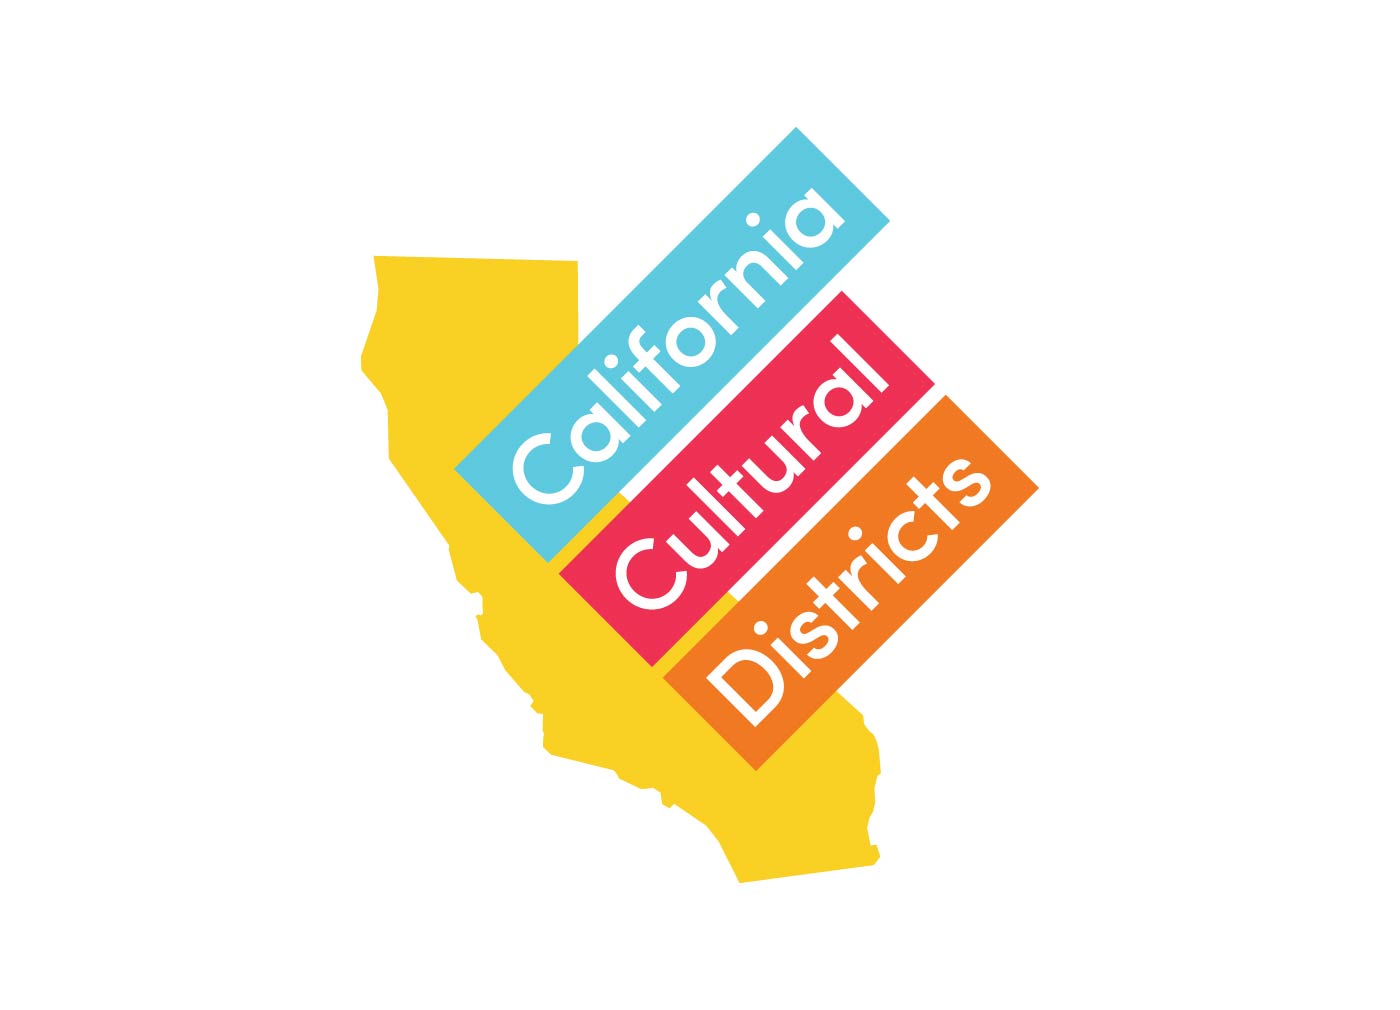 California Cultural Districts